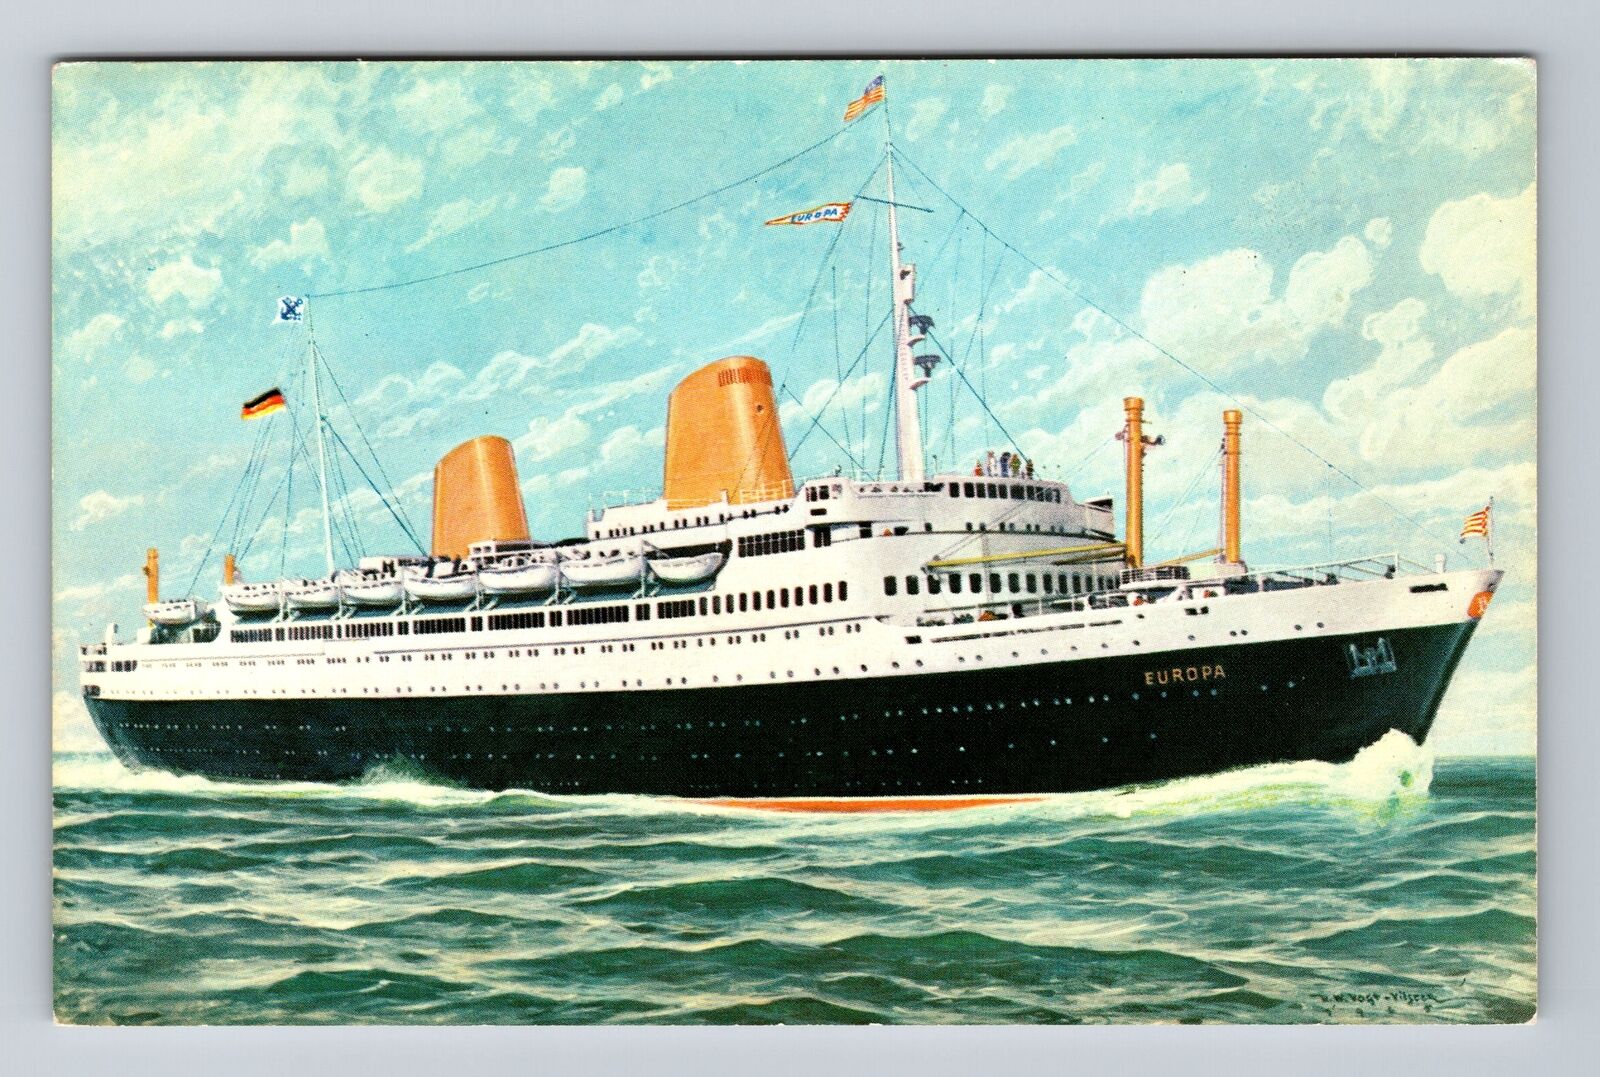 MS Europa Cruise Ship, North German Lloyd, Transportation, Vintage Postcard